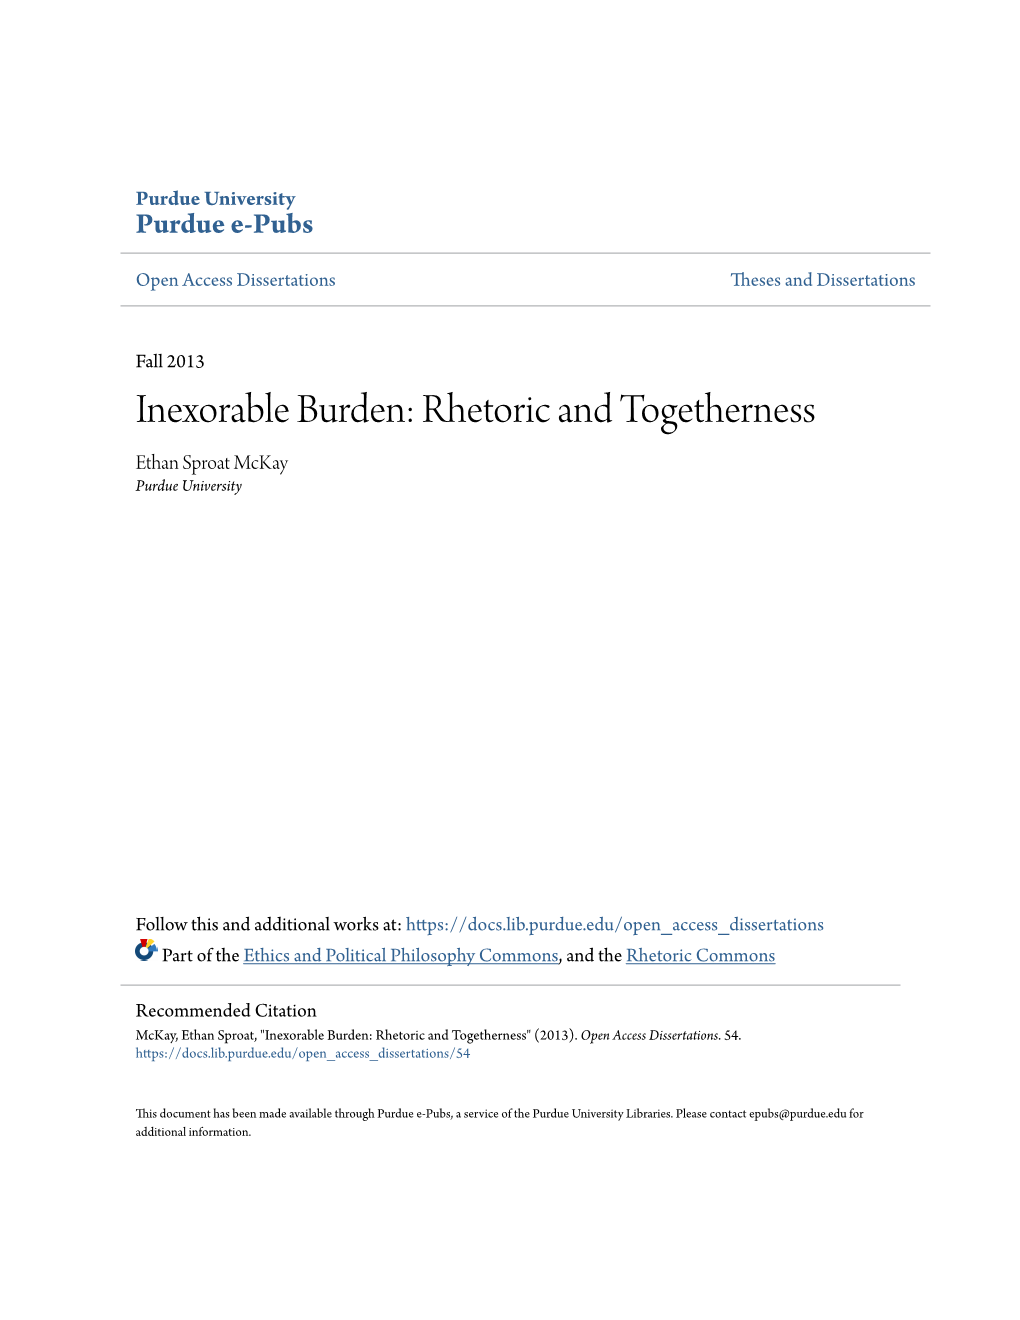 Inexorable Burden: Rhetoric and Togetherness Ethan Sproat Mckay Purdue University